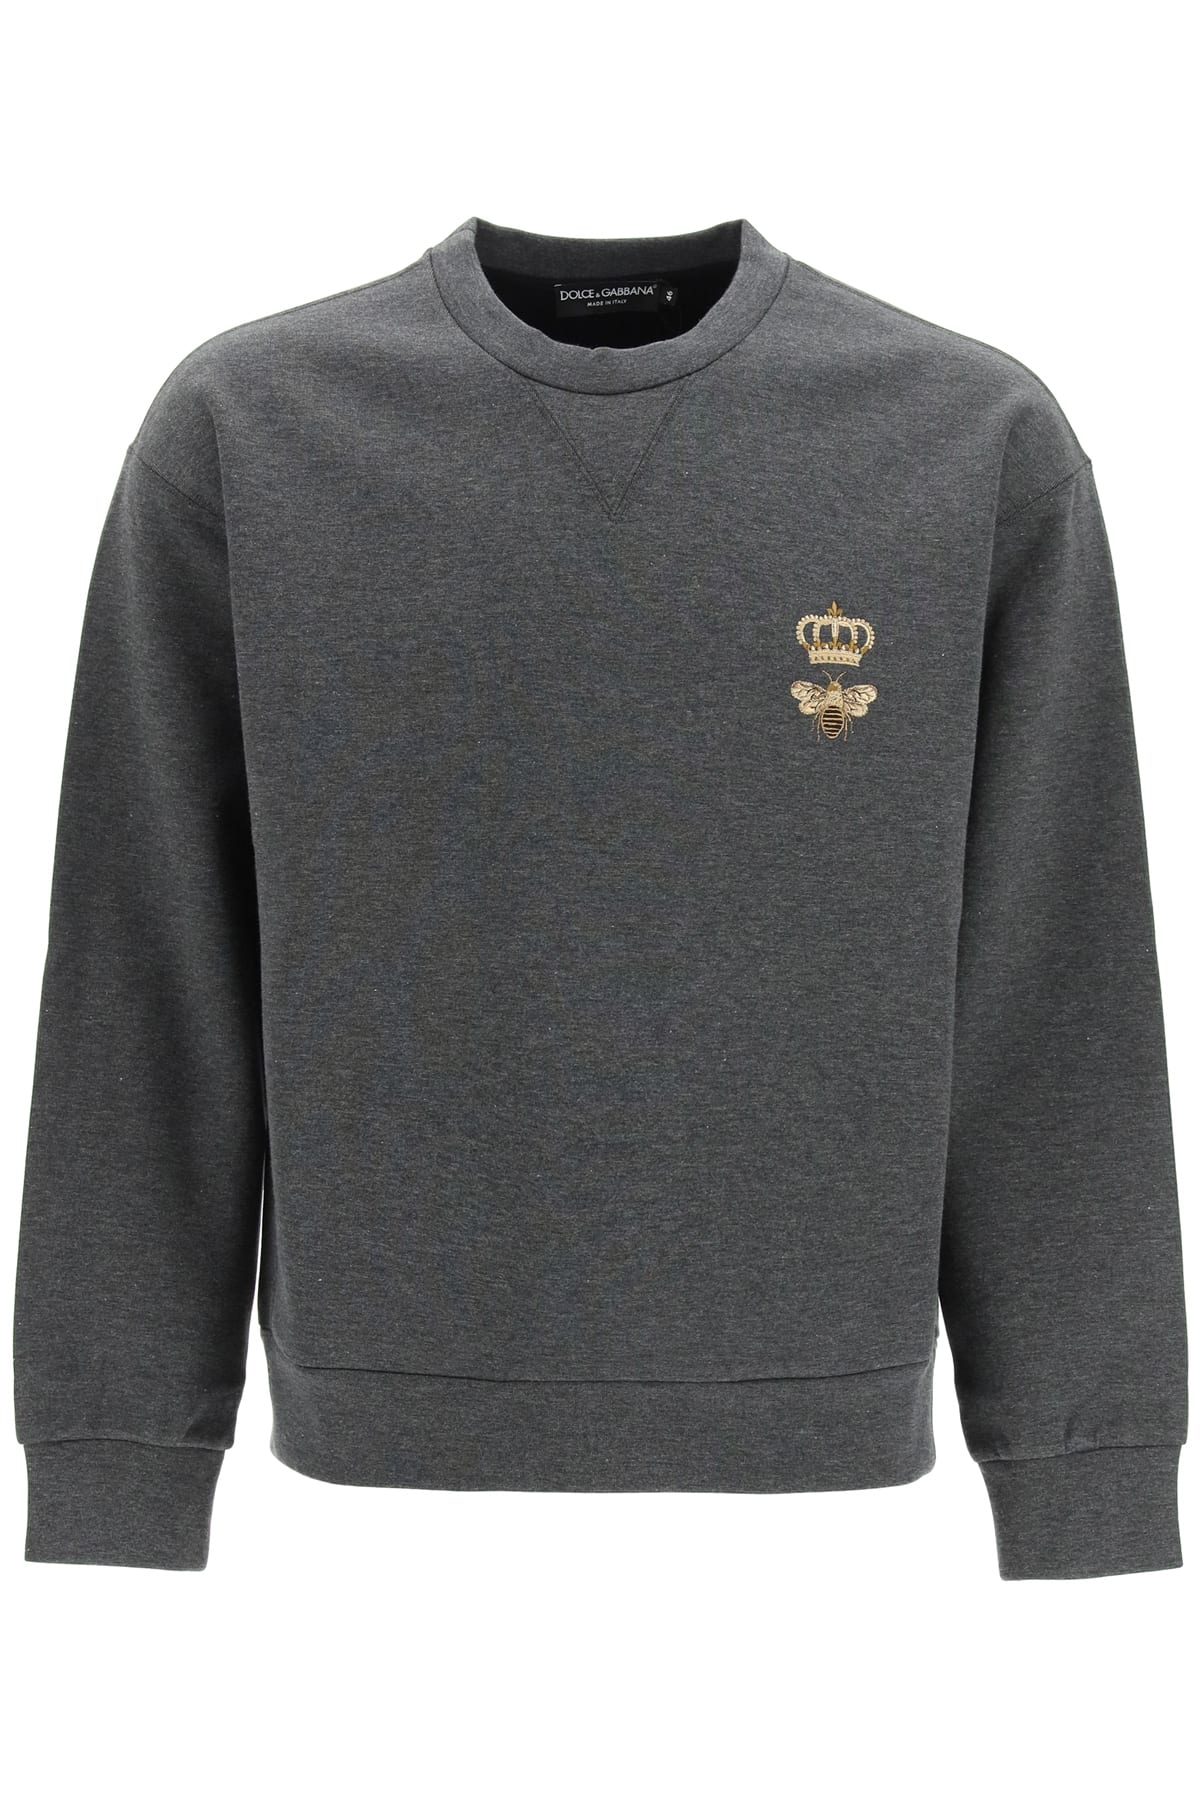 Dolce & Gabbana Crewneck Sweatshirt With Embroidery